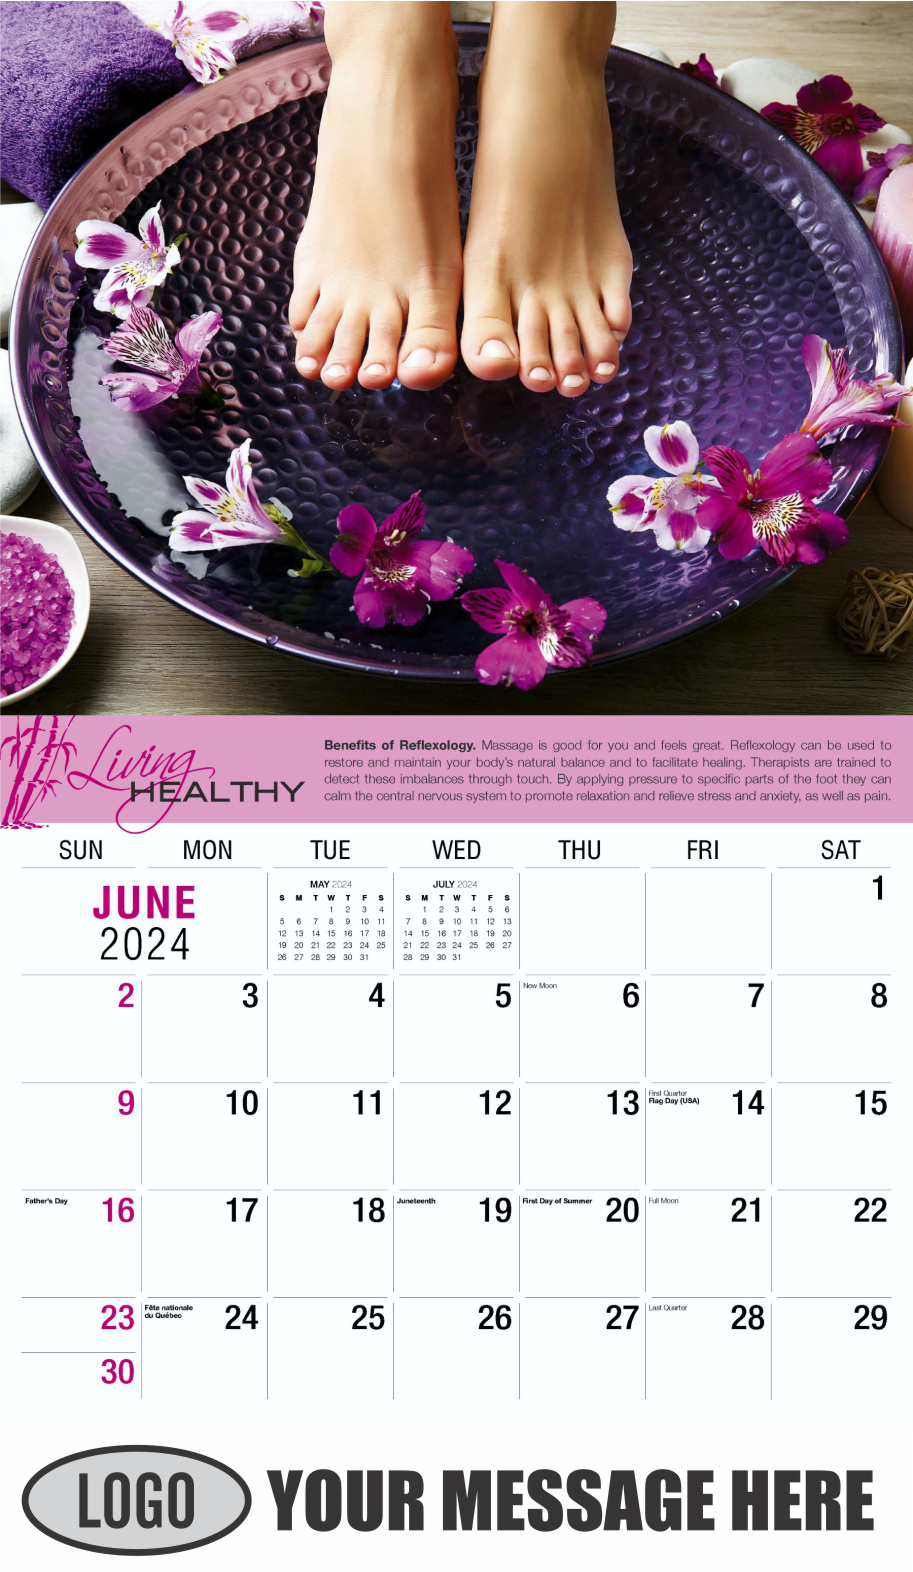 Living Healthy 2024 Business Promotional Calendar - June